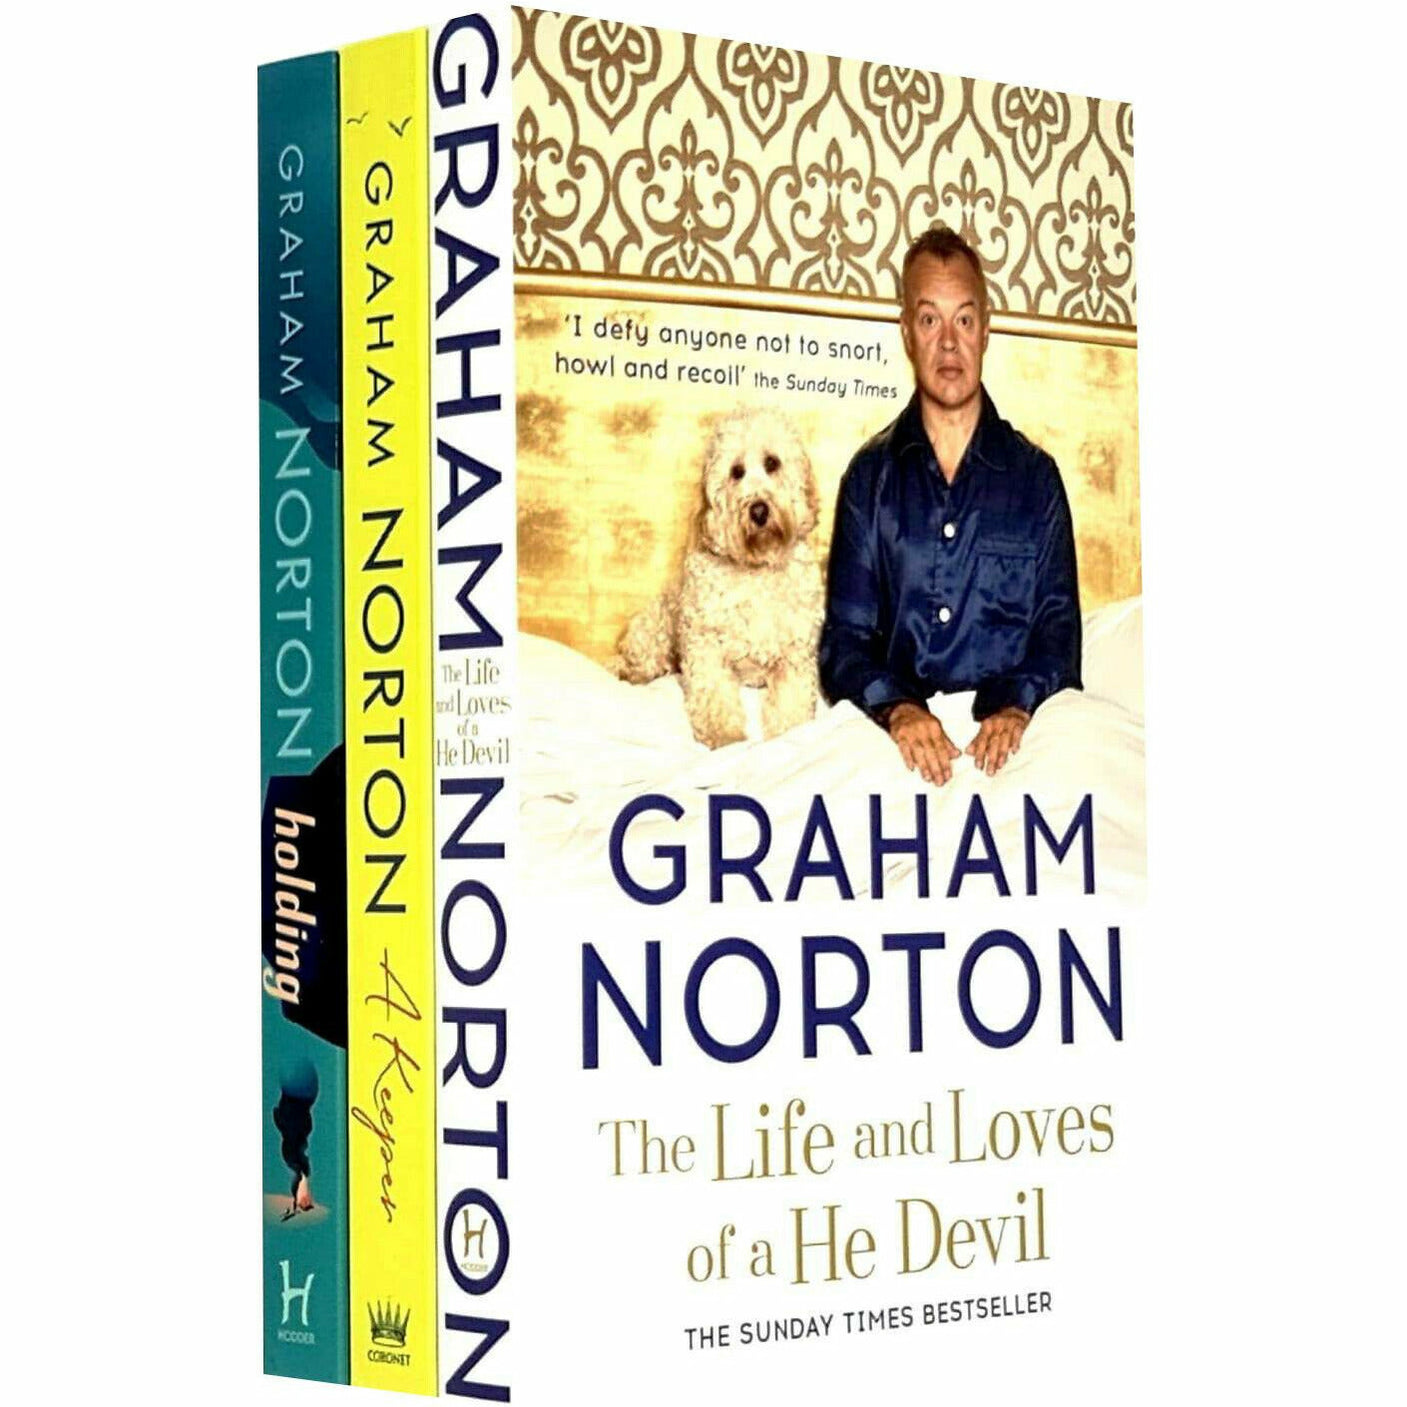 graham norton book a keeper review